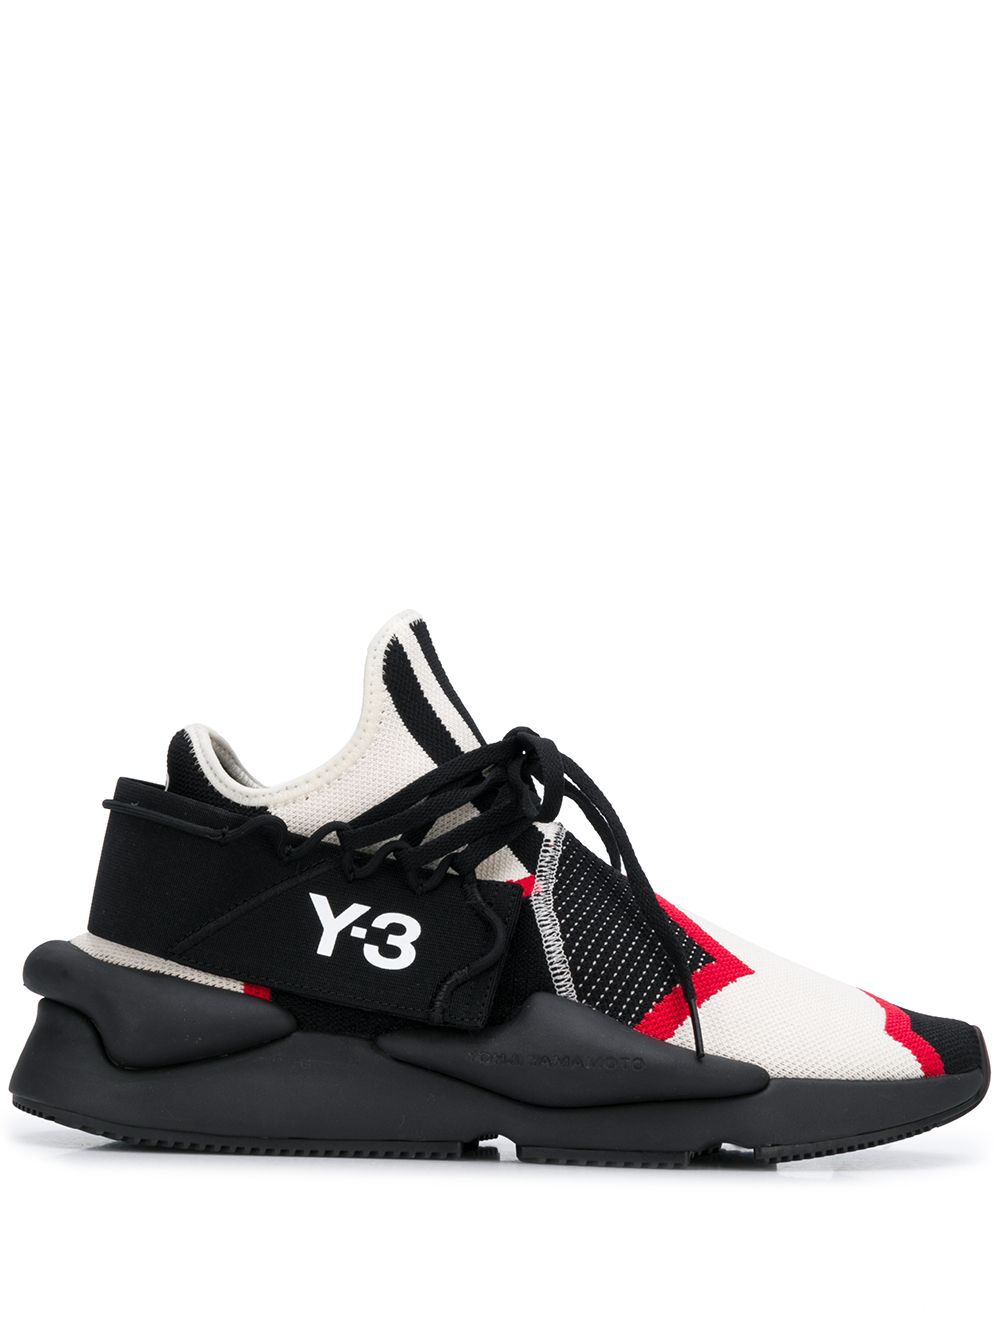 Y-3 Kaiwa Knit Sneakers - Farfetch